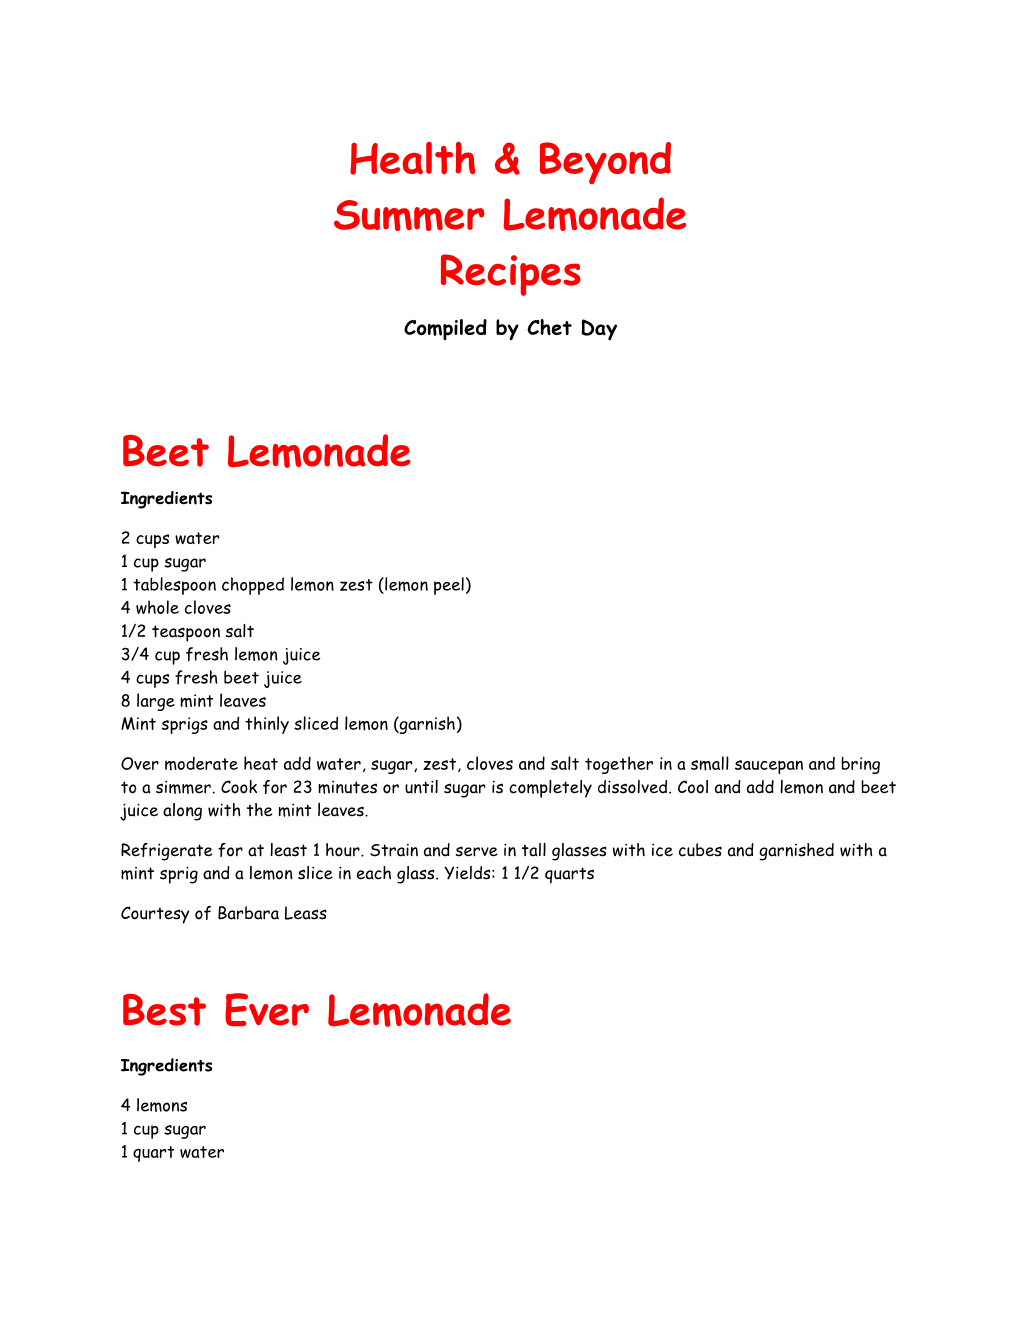 Health & Beyond Summer Lemonade Recipes